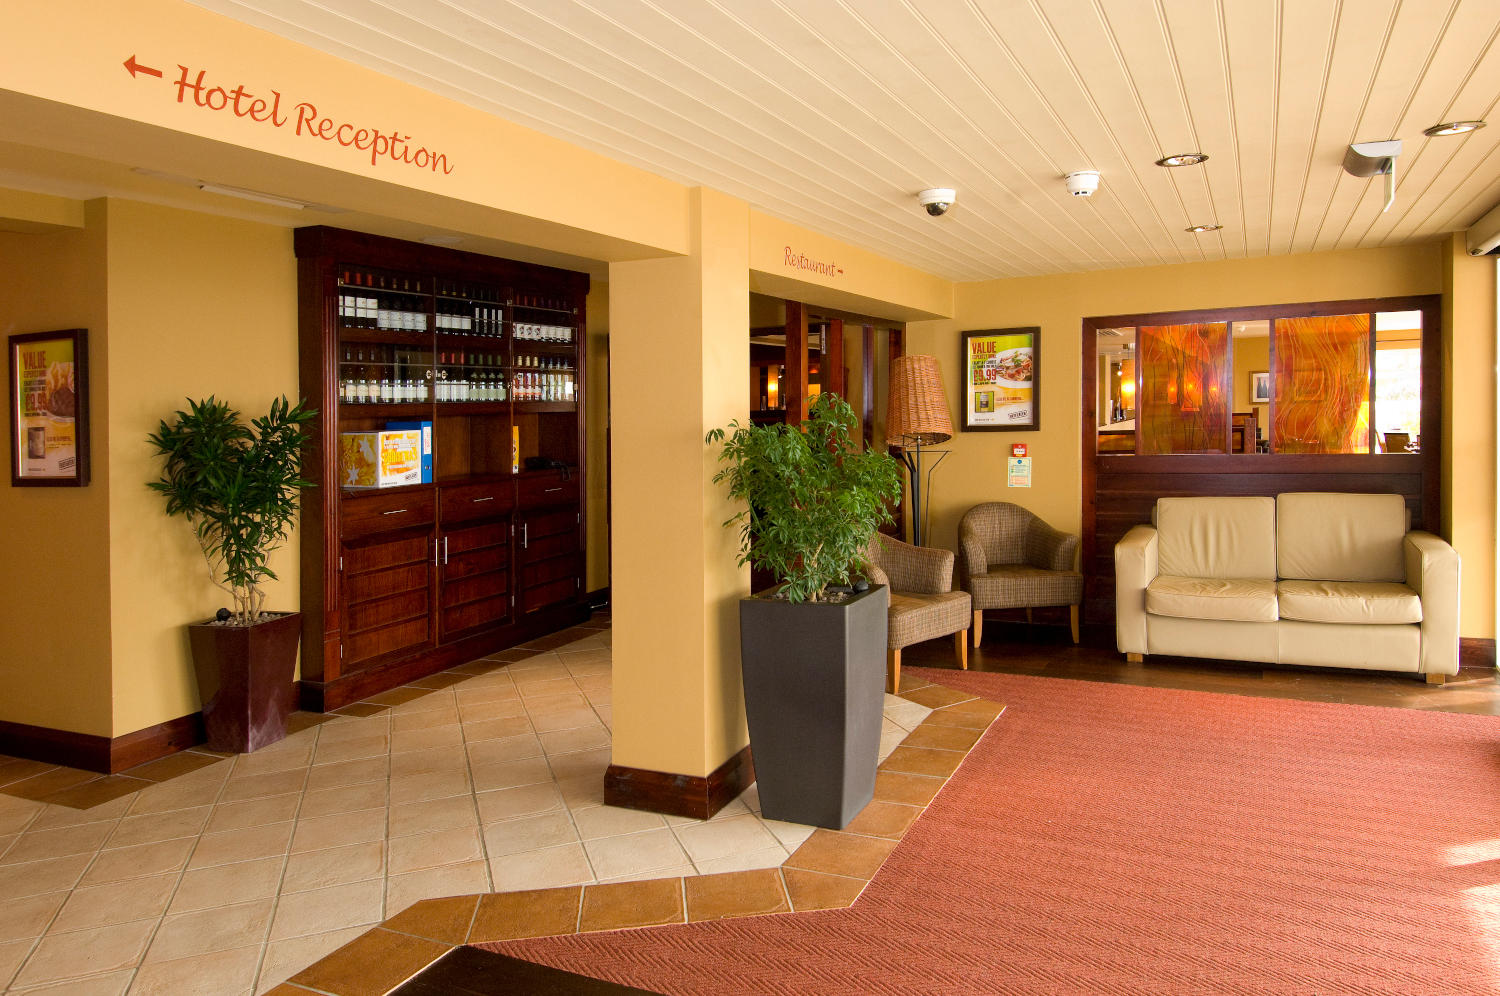 Premier Inn Torquay Seafront hotel lounge Premier Inn Torquay Seafront hotel Torquay 03333 219097